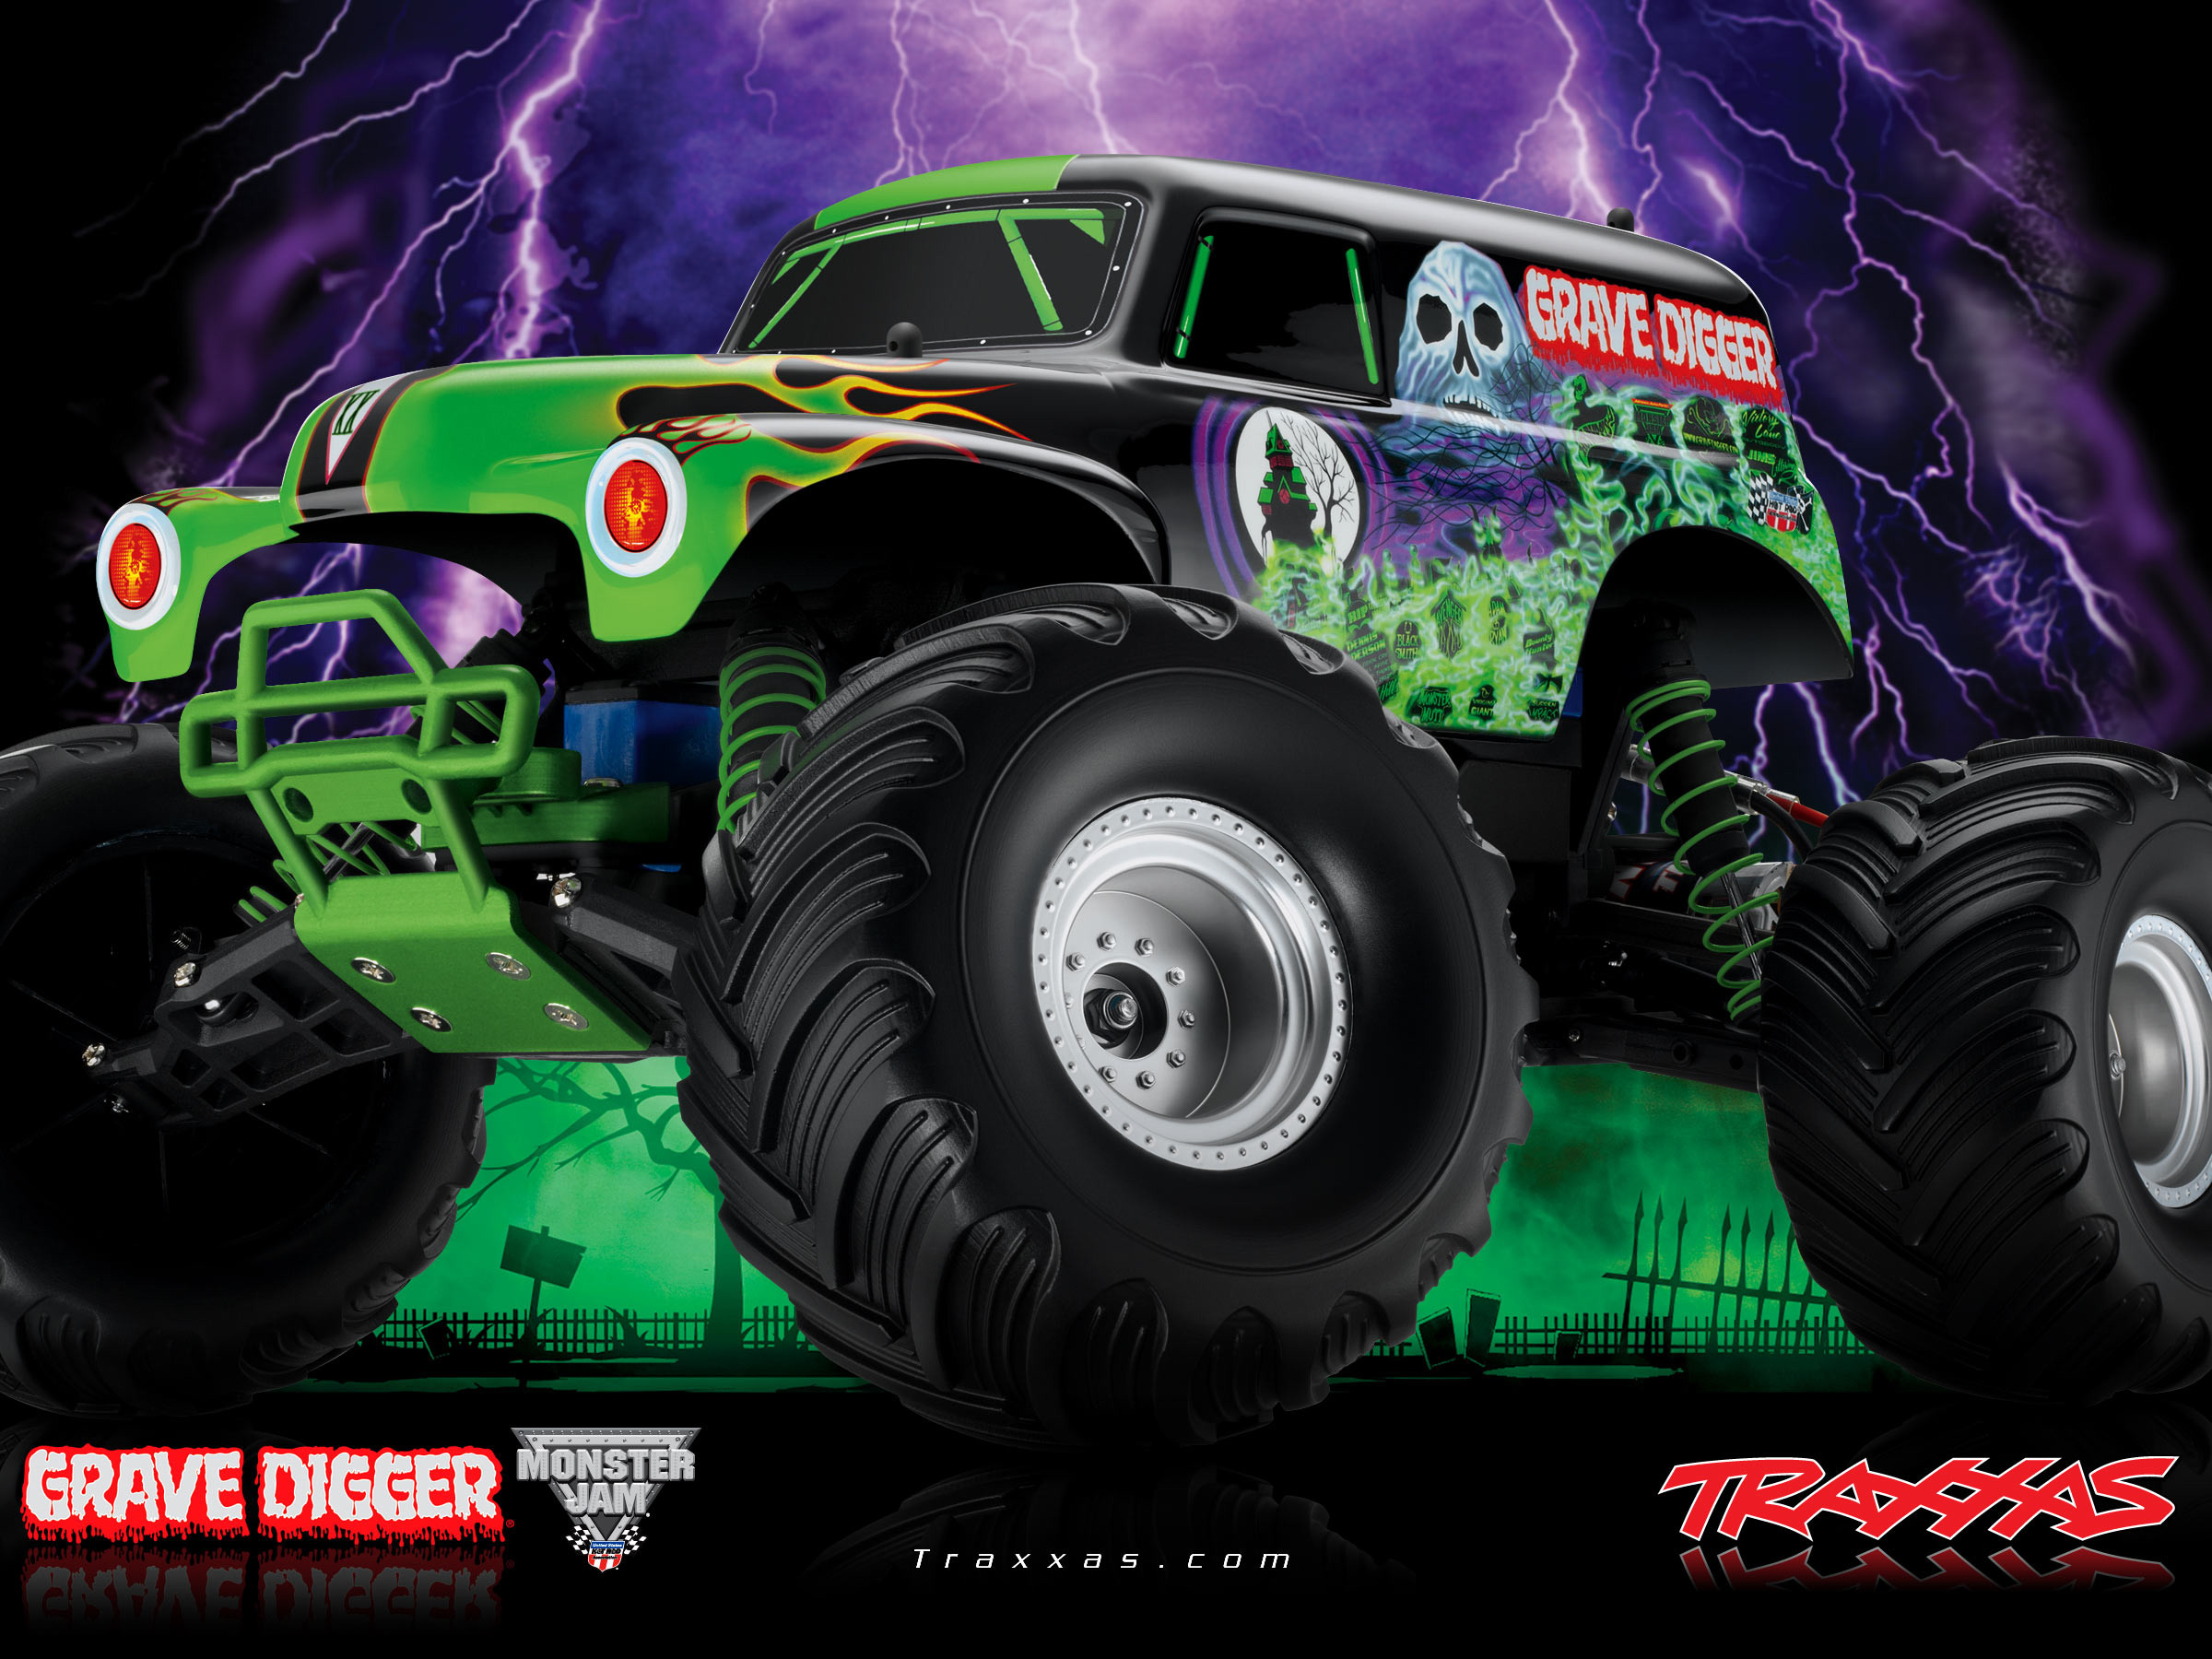 2400x1800 Grave Digger Monster Truck Wallpaper, Full HD 1080p, Best HD Grave .